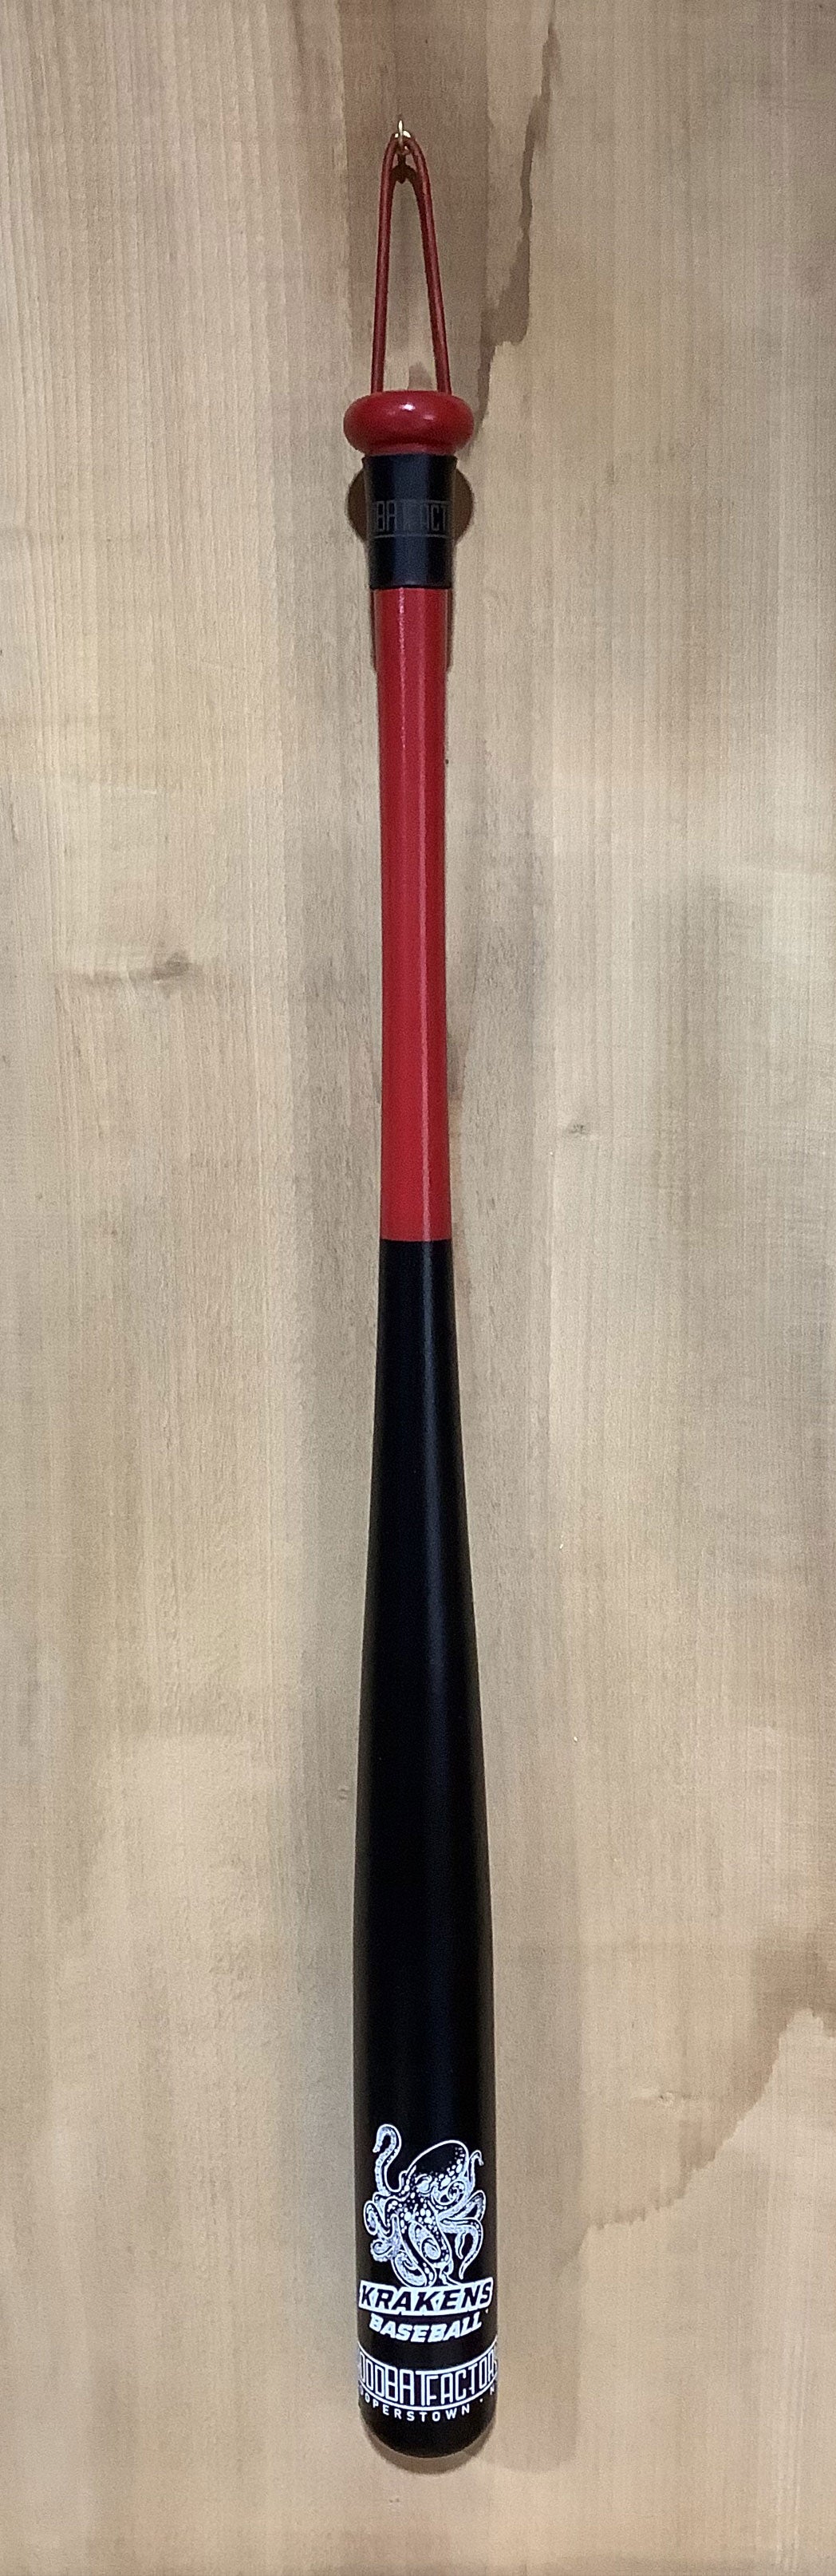 Custom Engraved & Hand Painted Trophy Bat "Krakens Baseball"